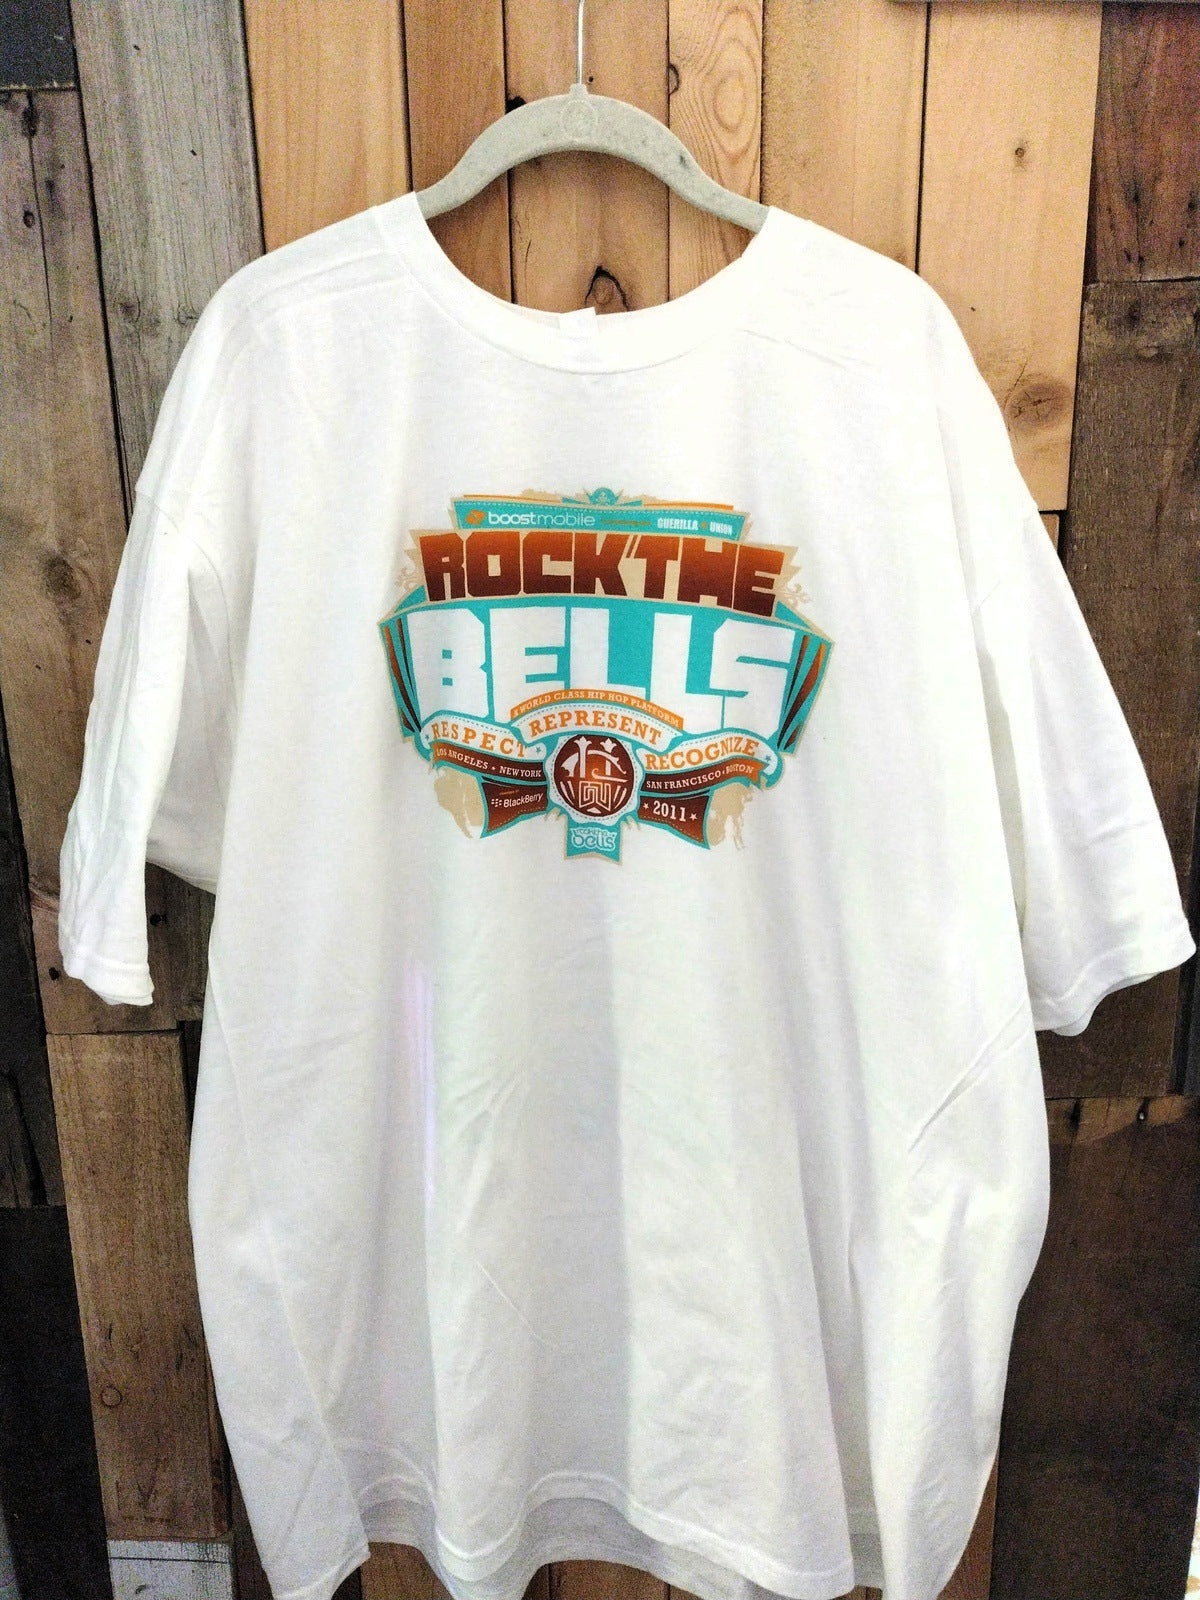 2011 Rock The Bells Official Show T Shirt Size 3XL NEW! Unworn!